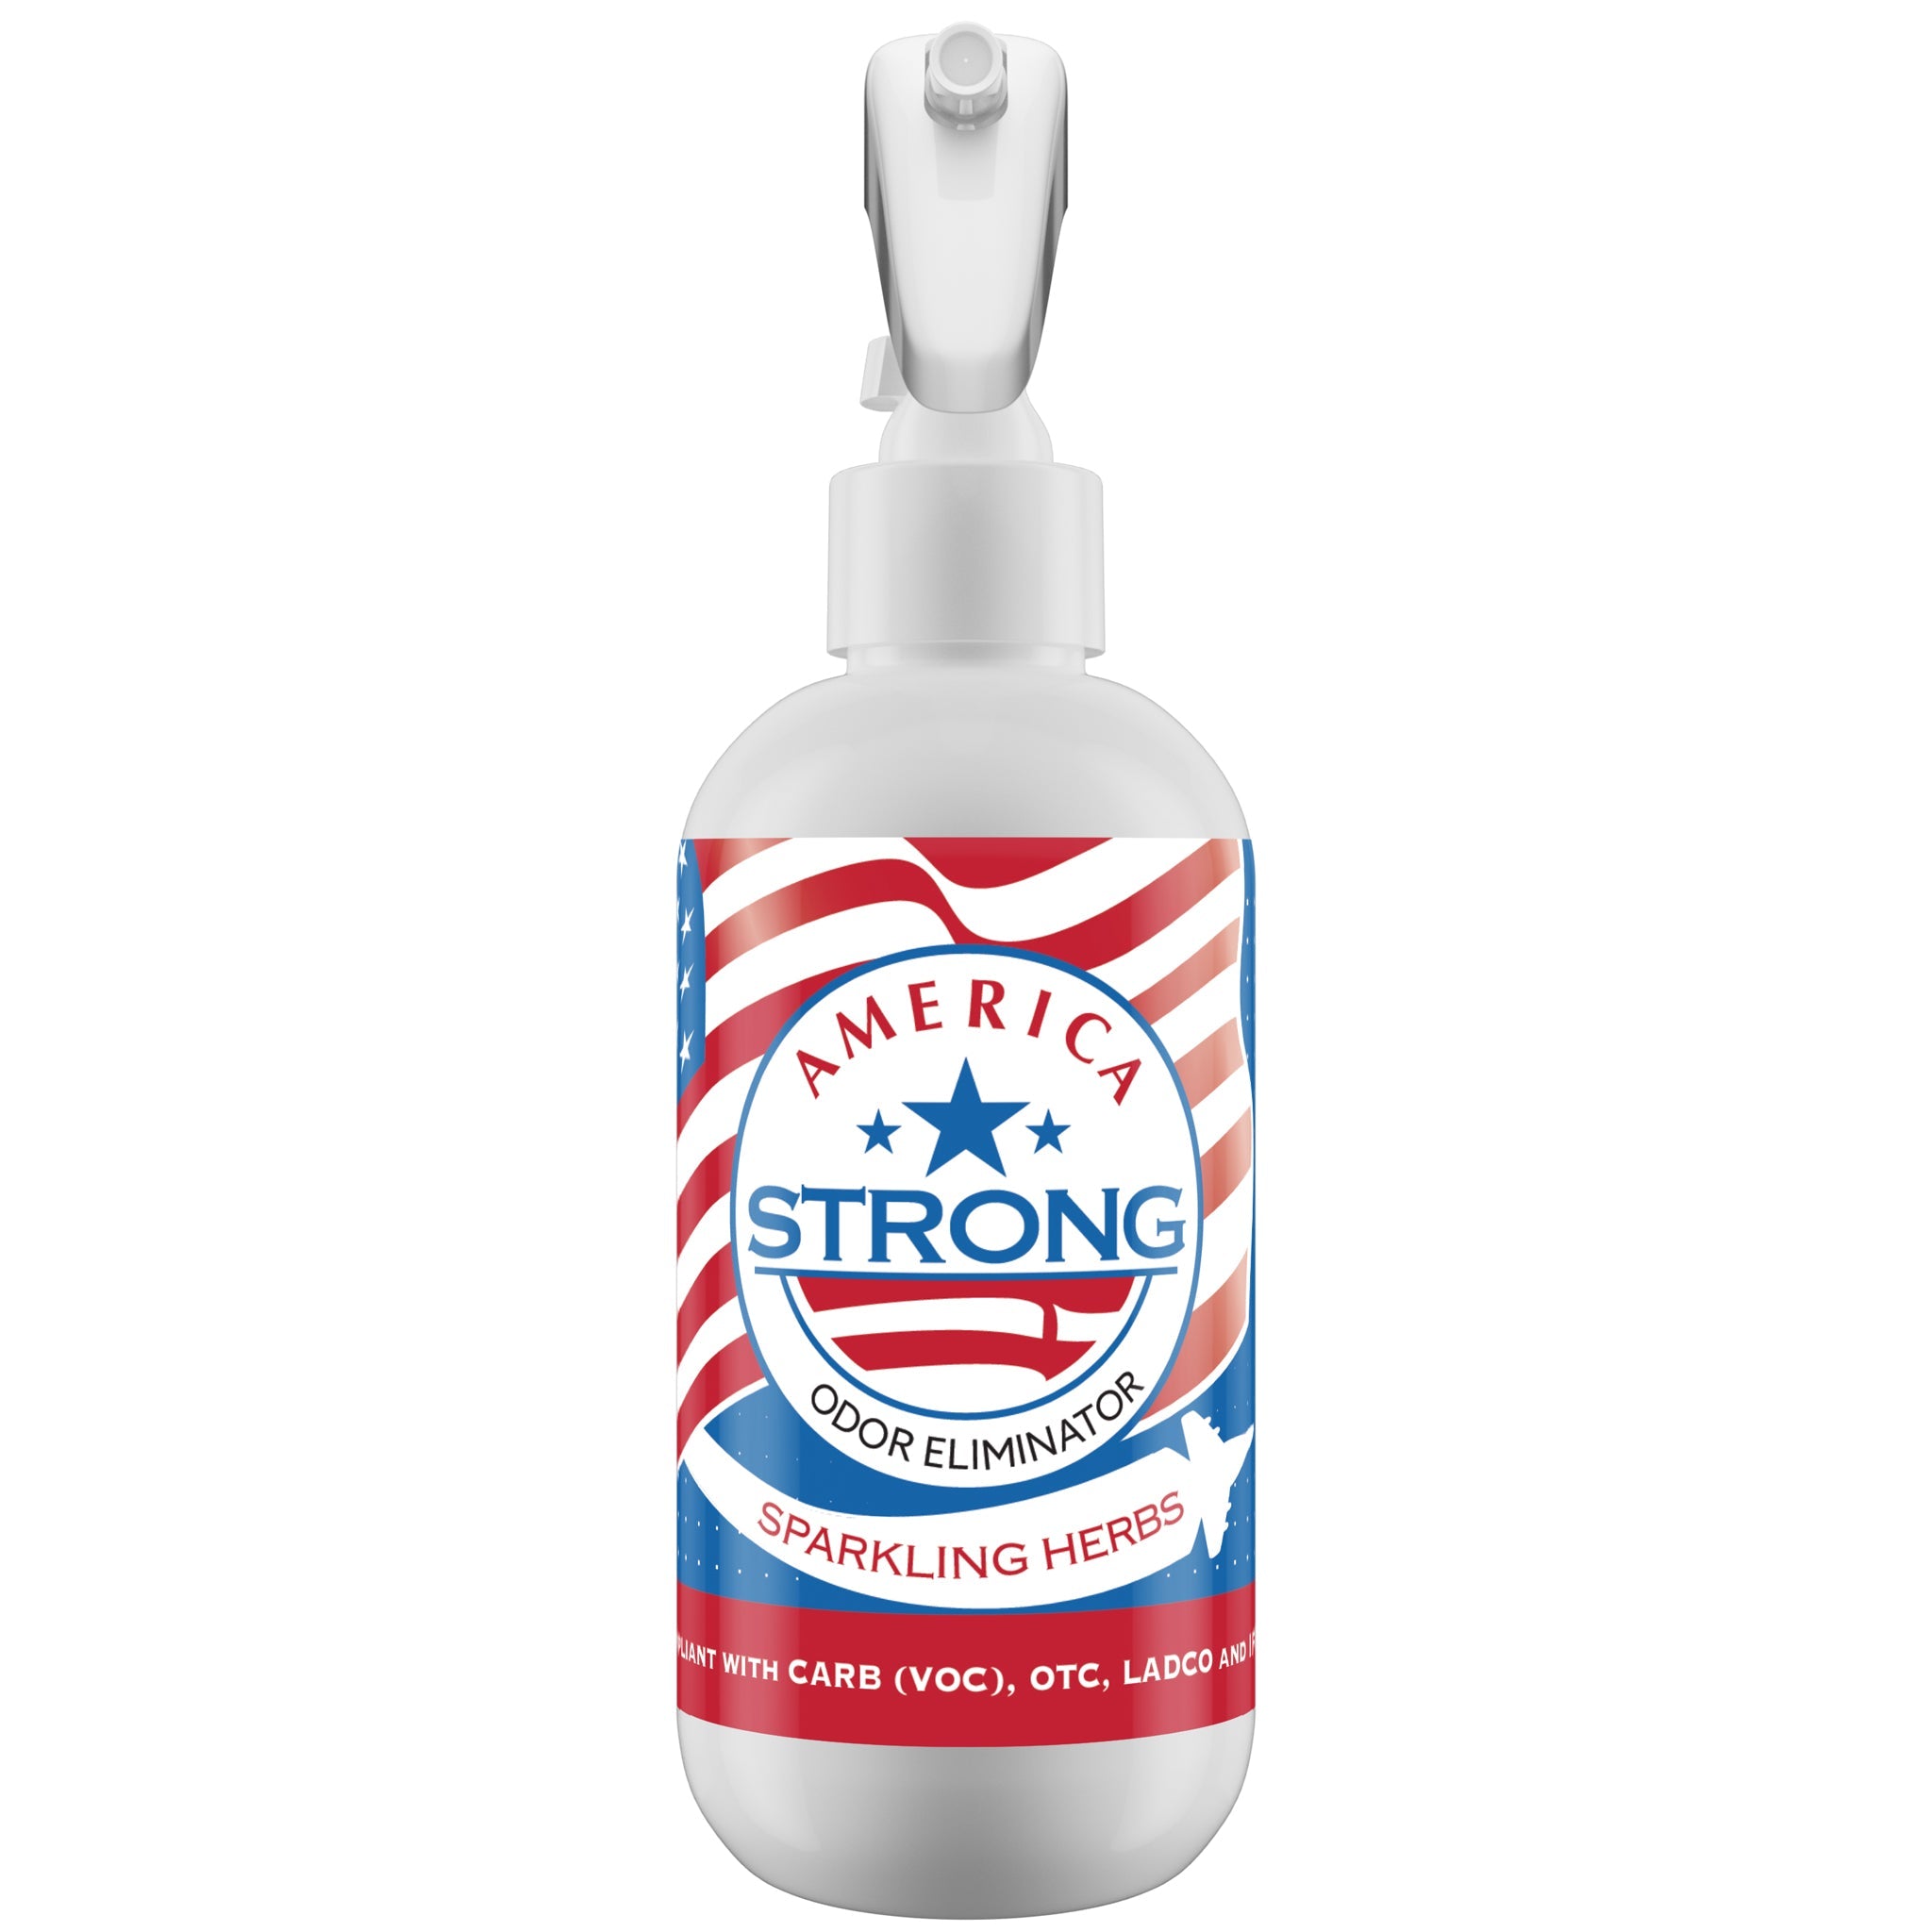 America Strong Odor Eliminator - Sparkling Herbs Scent Size: 8.0oz